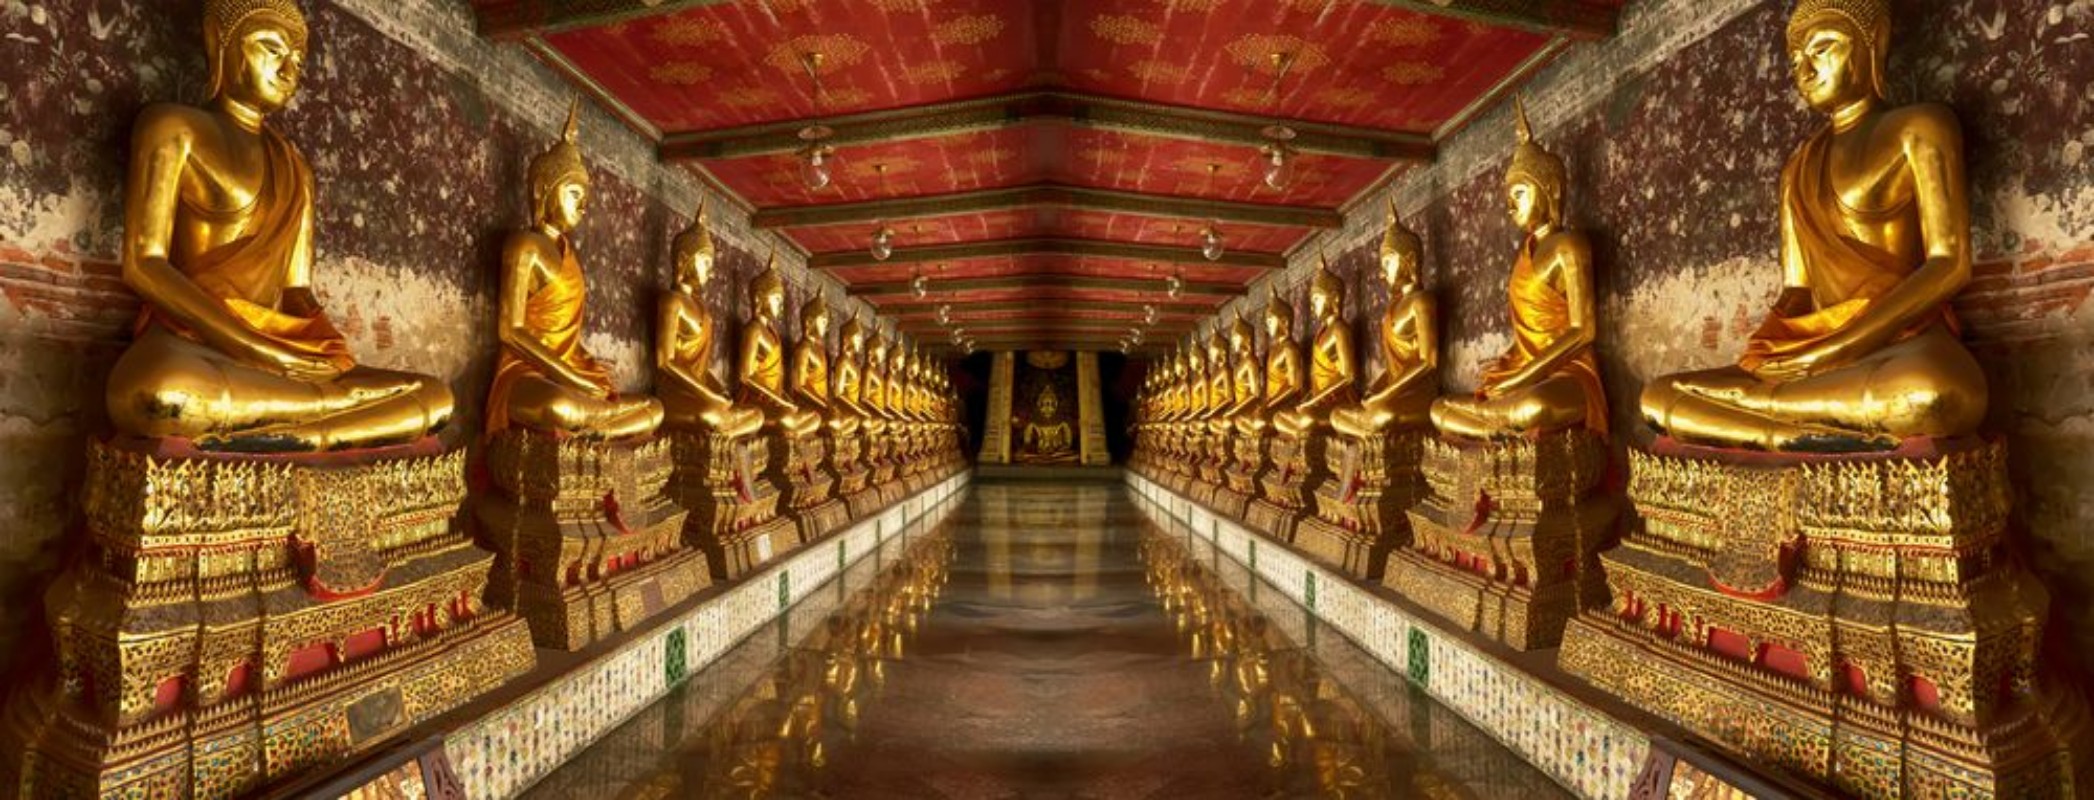 Image de Landmark of Wat Suthat